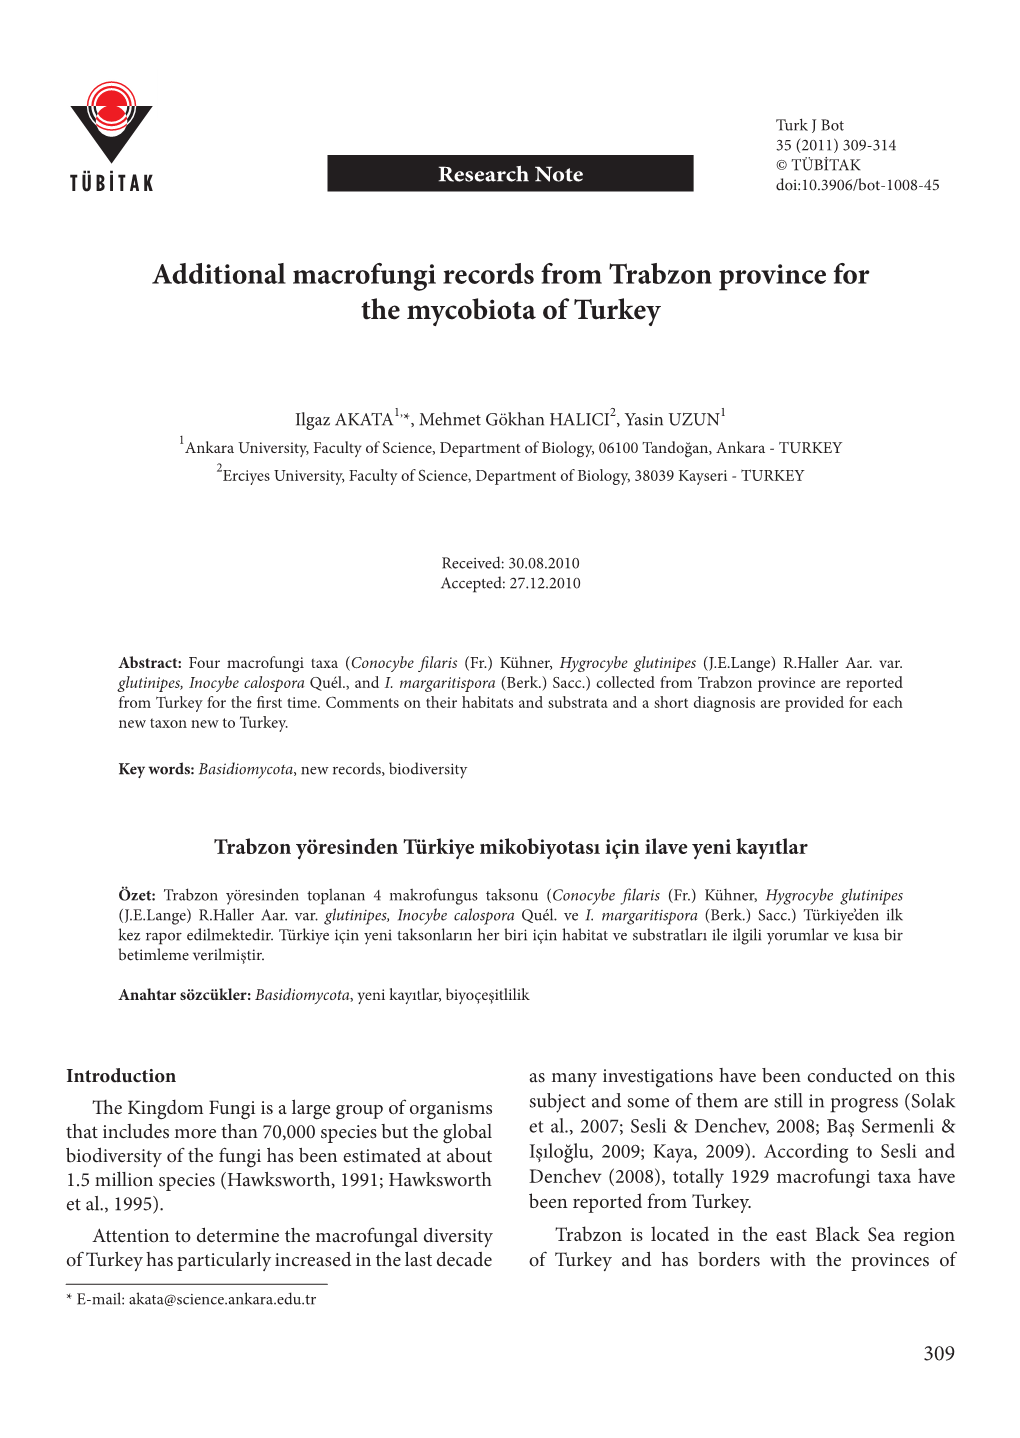 Additional Macrofungi Records from Trabzon Province for the Mycobiota of Turkey